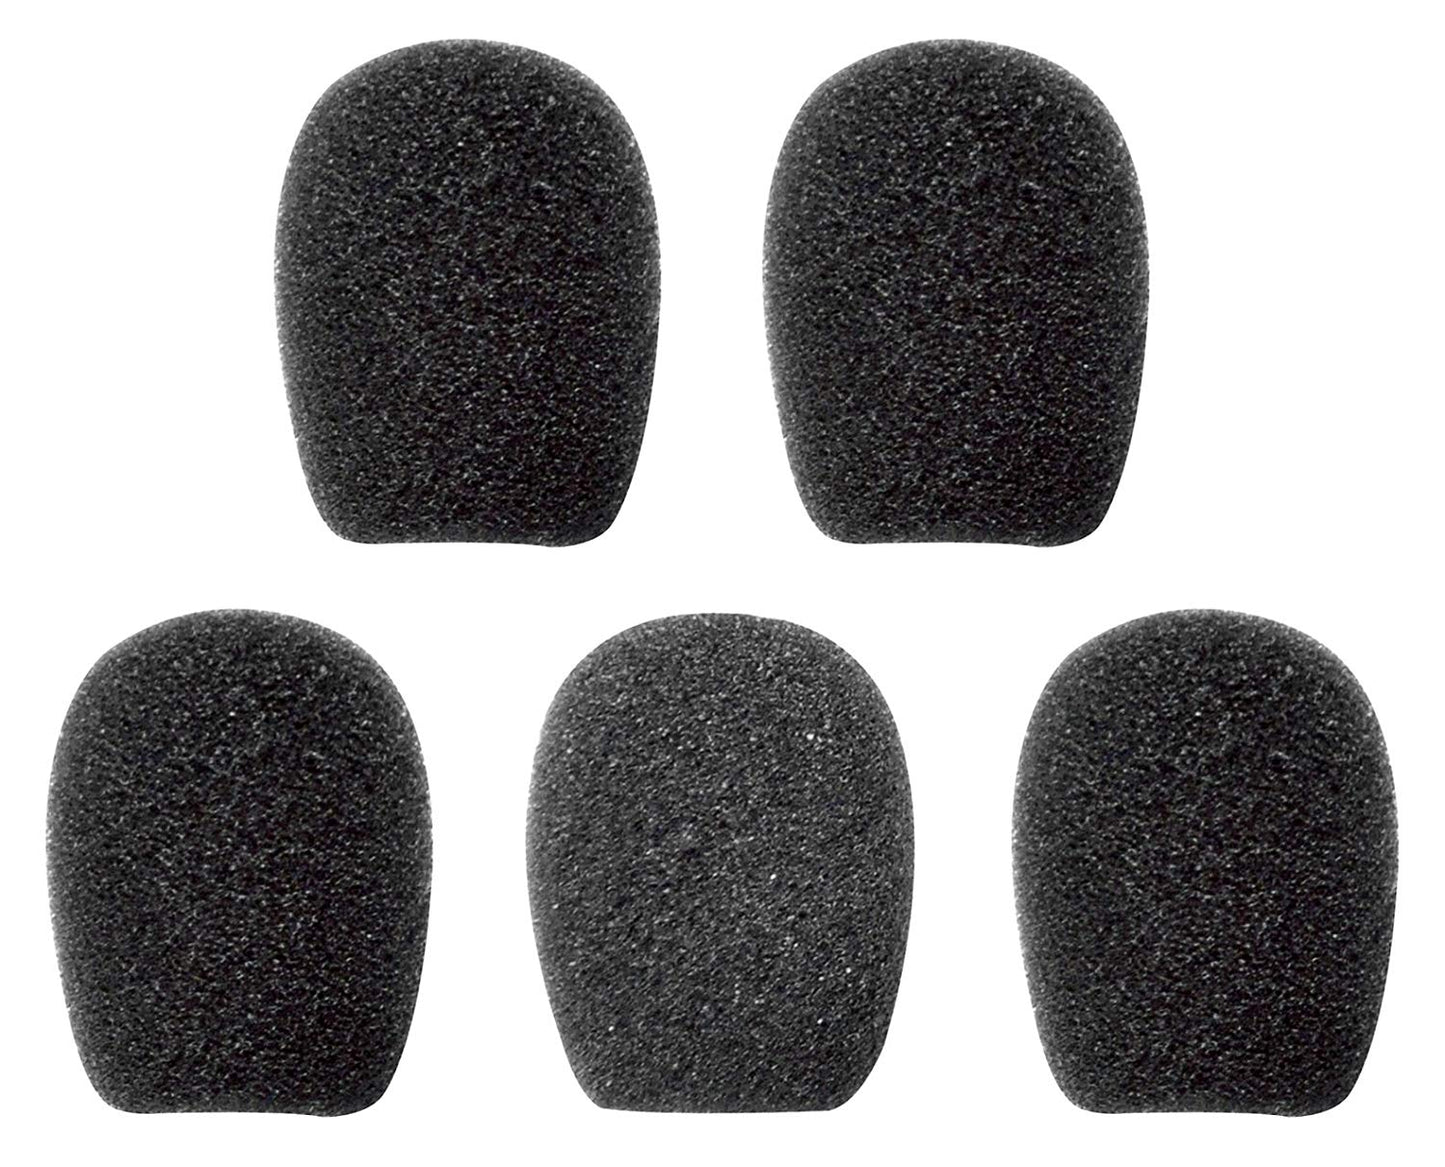 SENA Micro Sponges For Smh10R, Smh5, Smh3 And Sph10 Series (5Pcs)